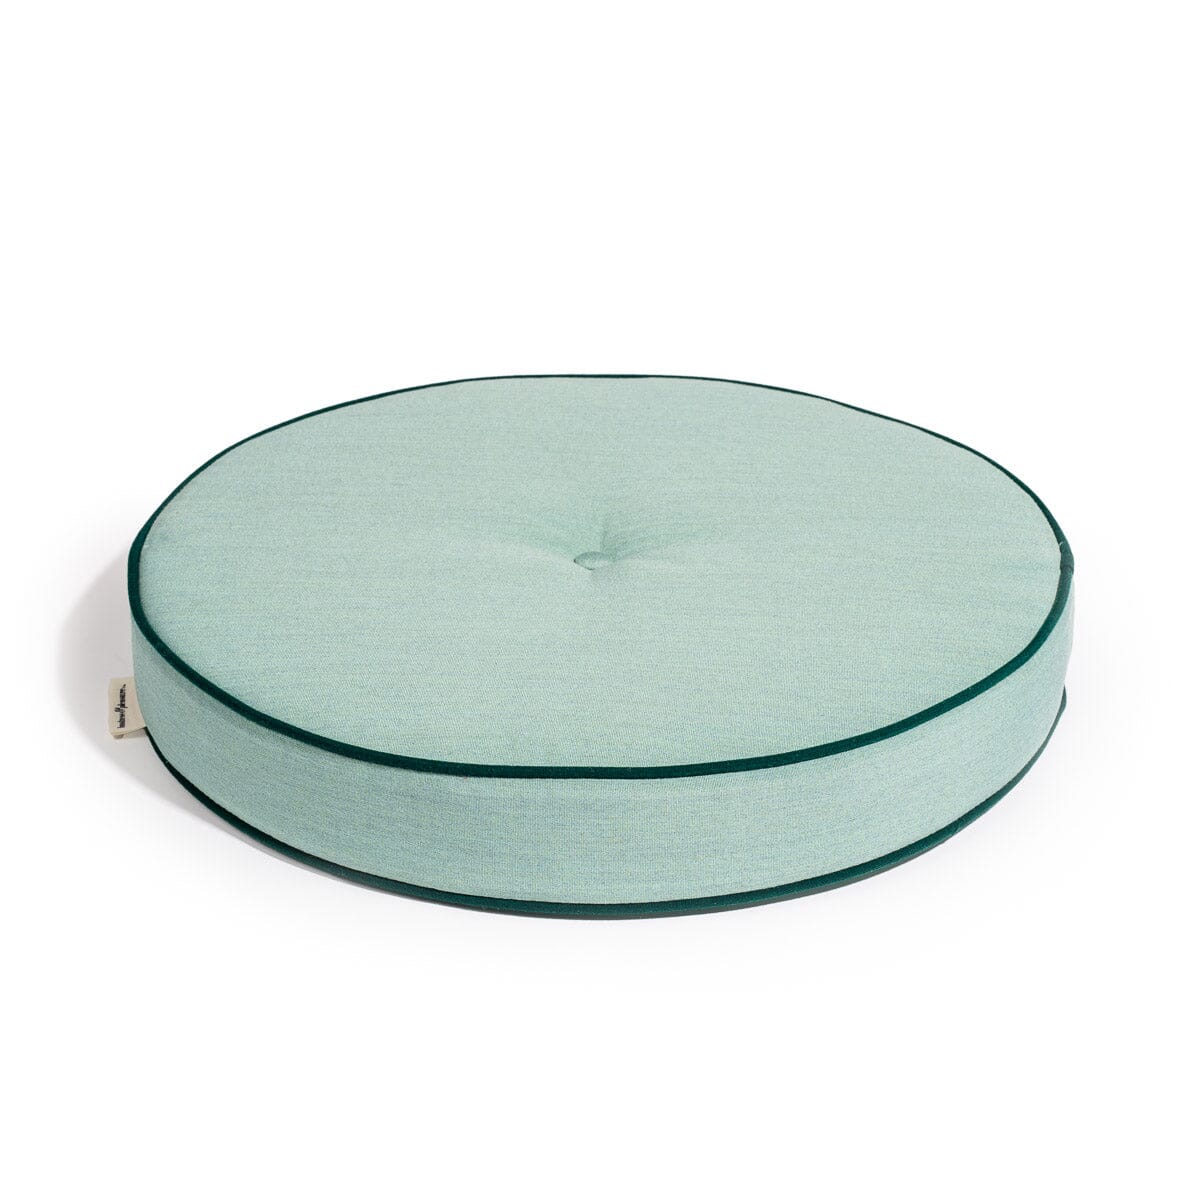 The Circular Pillow - Rivie Green Circular Pillow Business & Pleasure Co Aus 